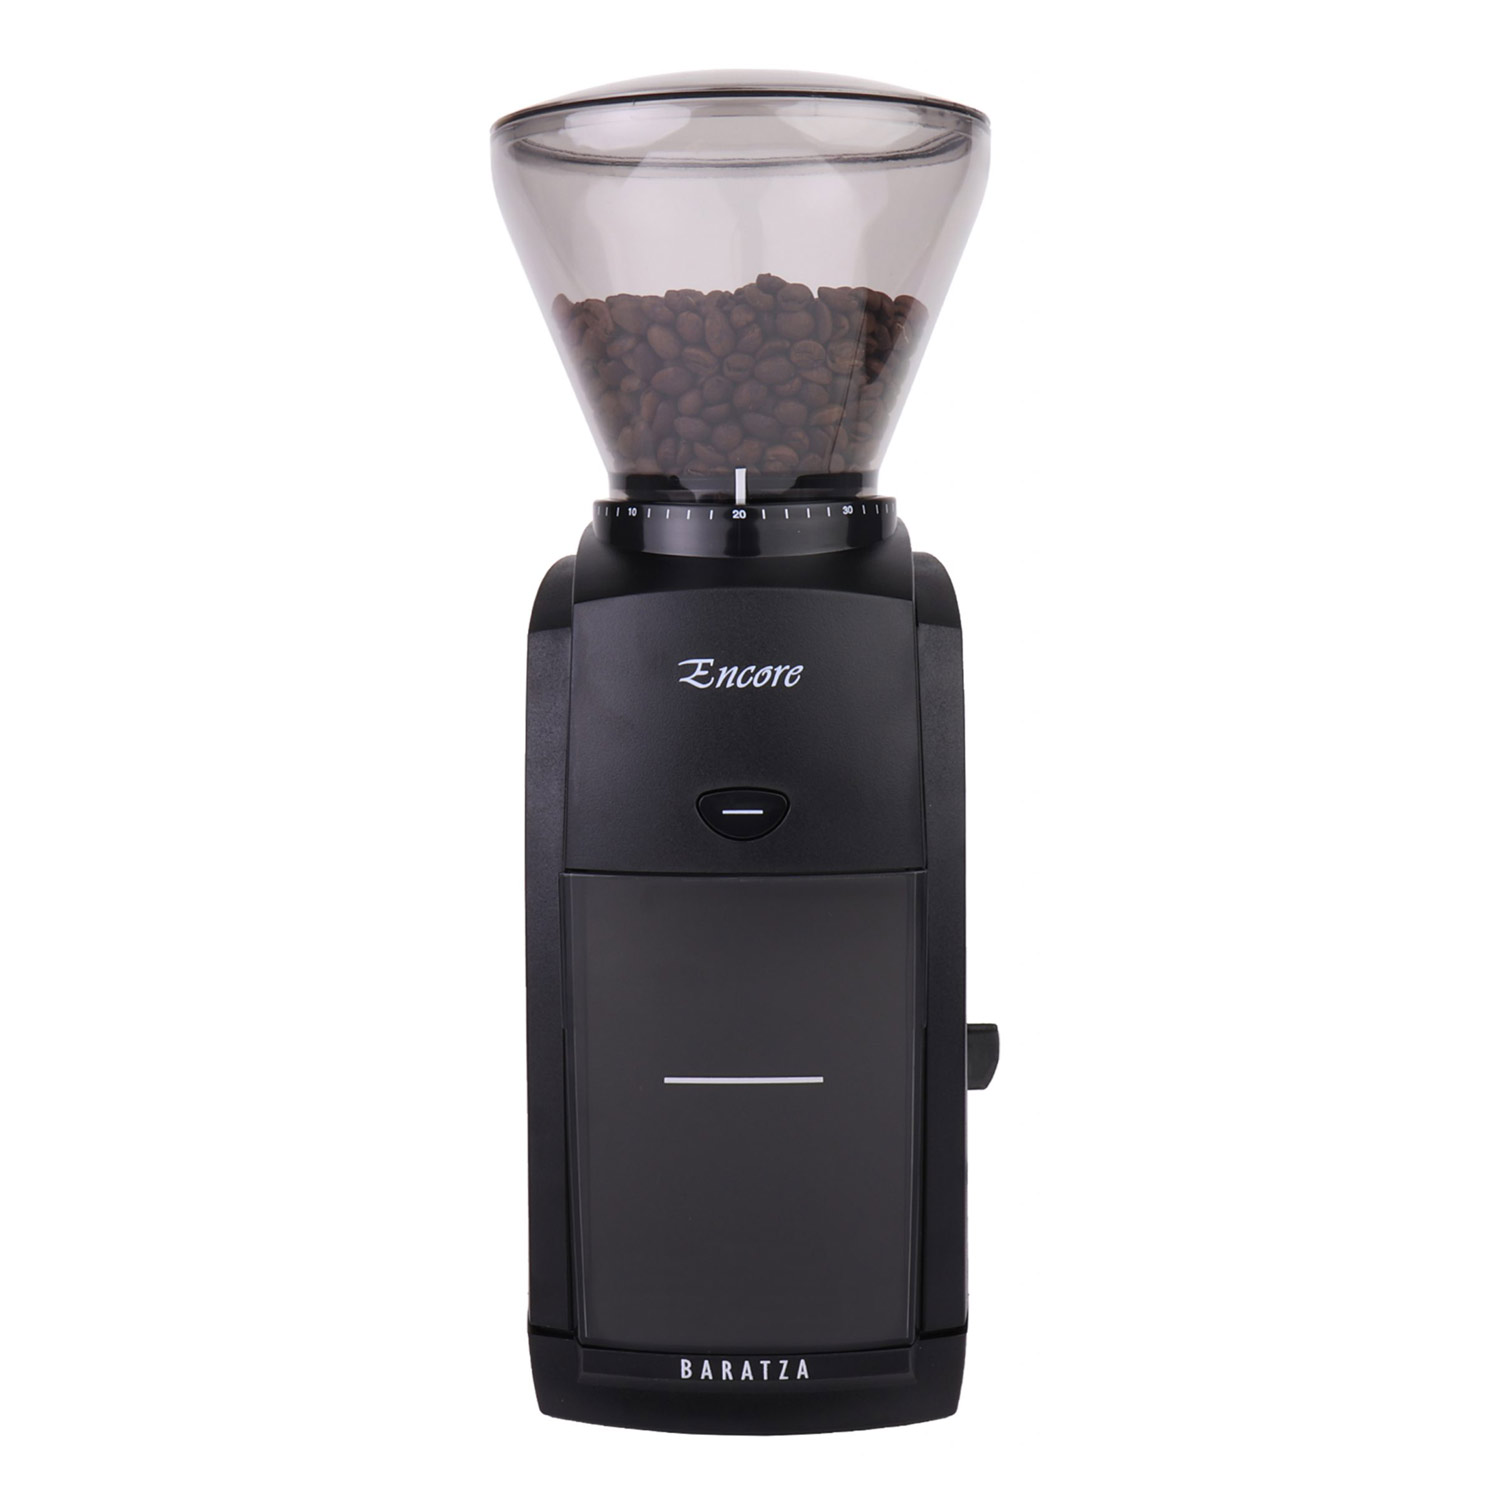 Baratza Encore Coffee Grinder - Black (2020 Update)